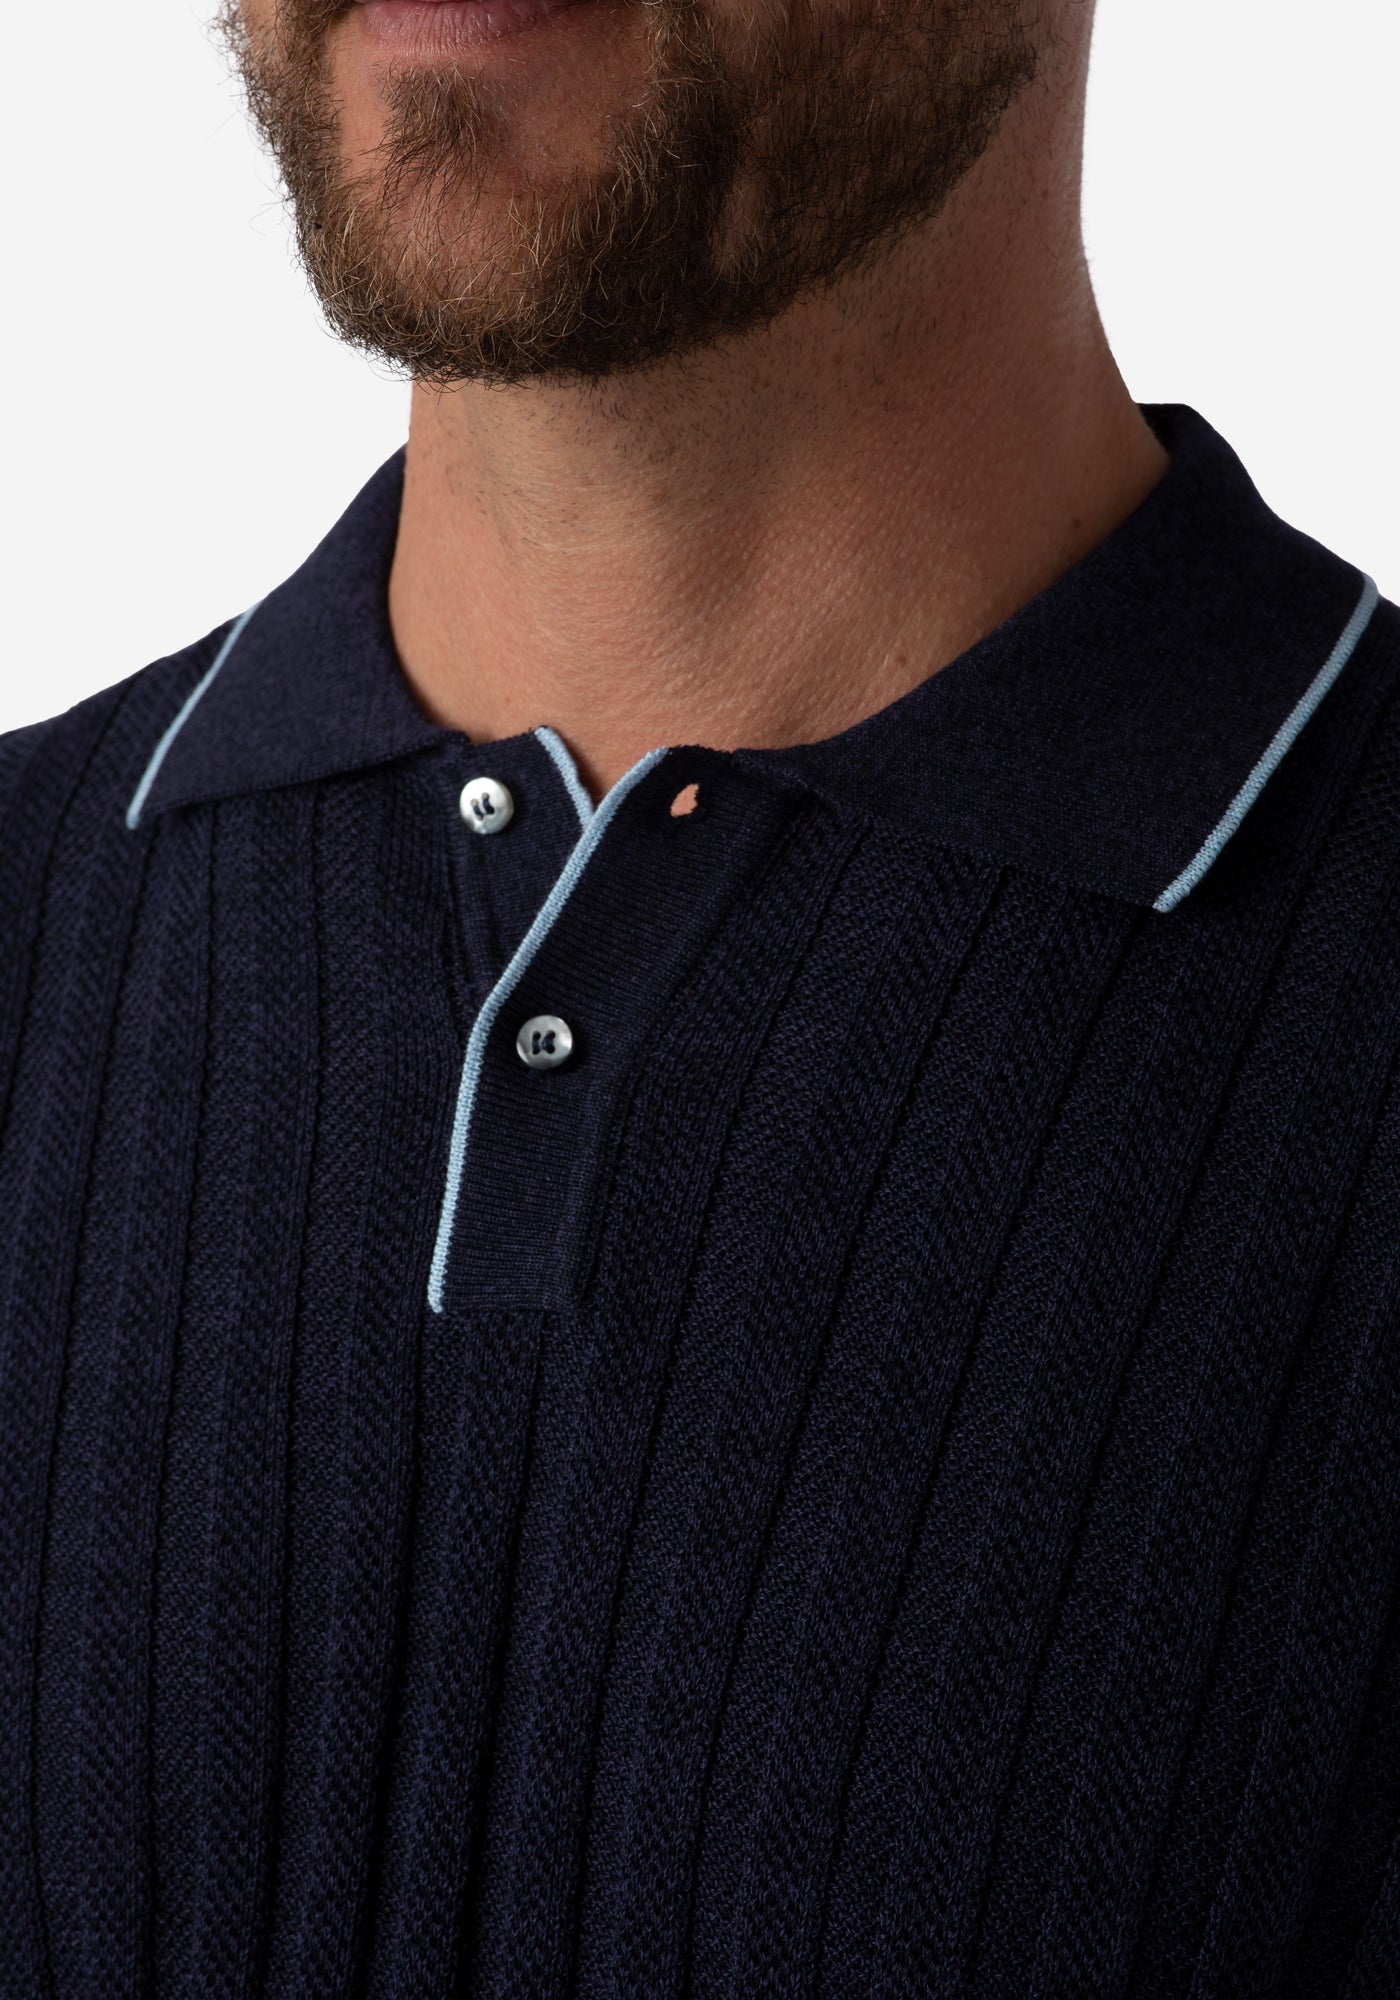 Obsidian Blue Stripe Knitted Polo Shirt